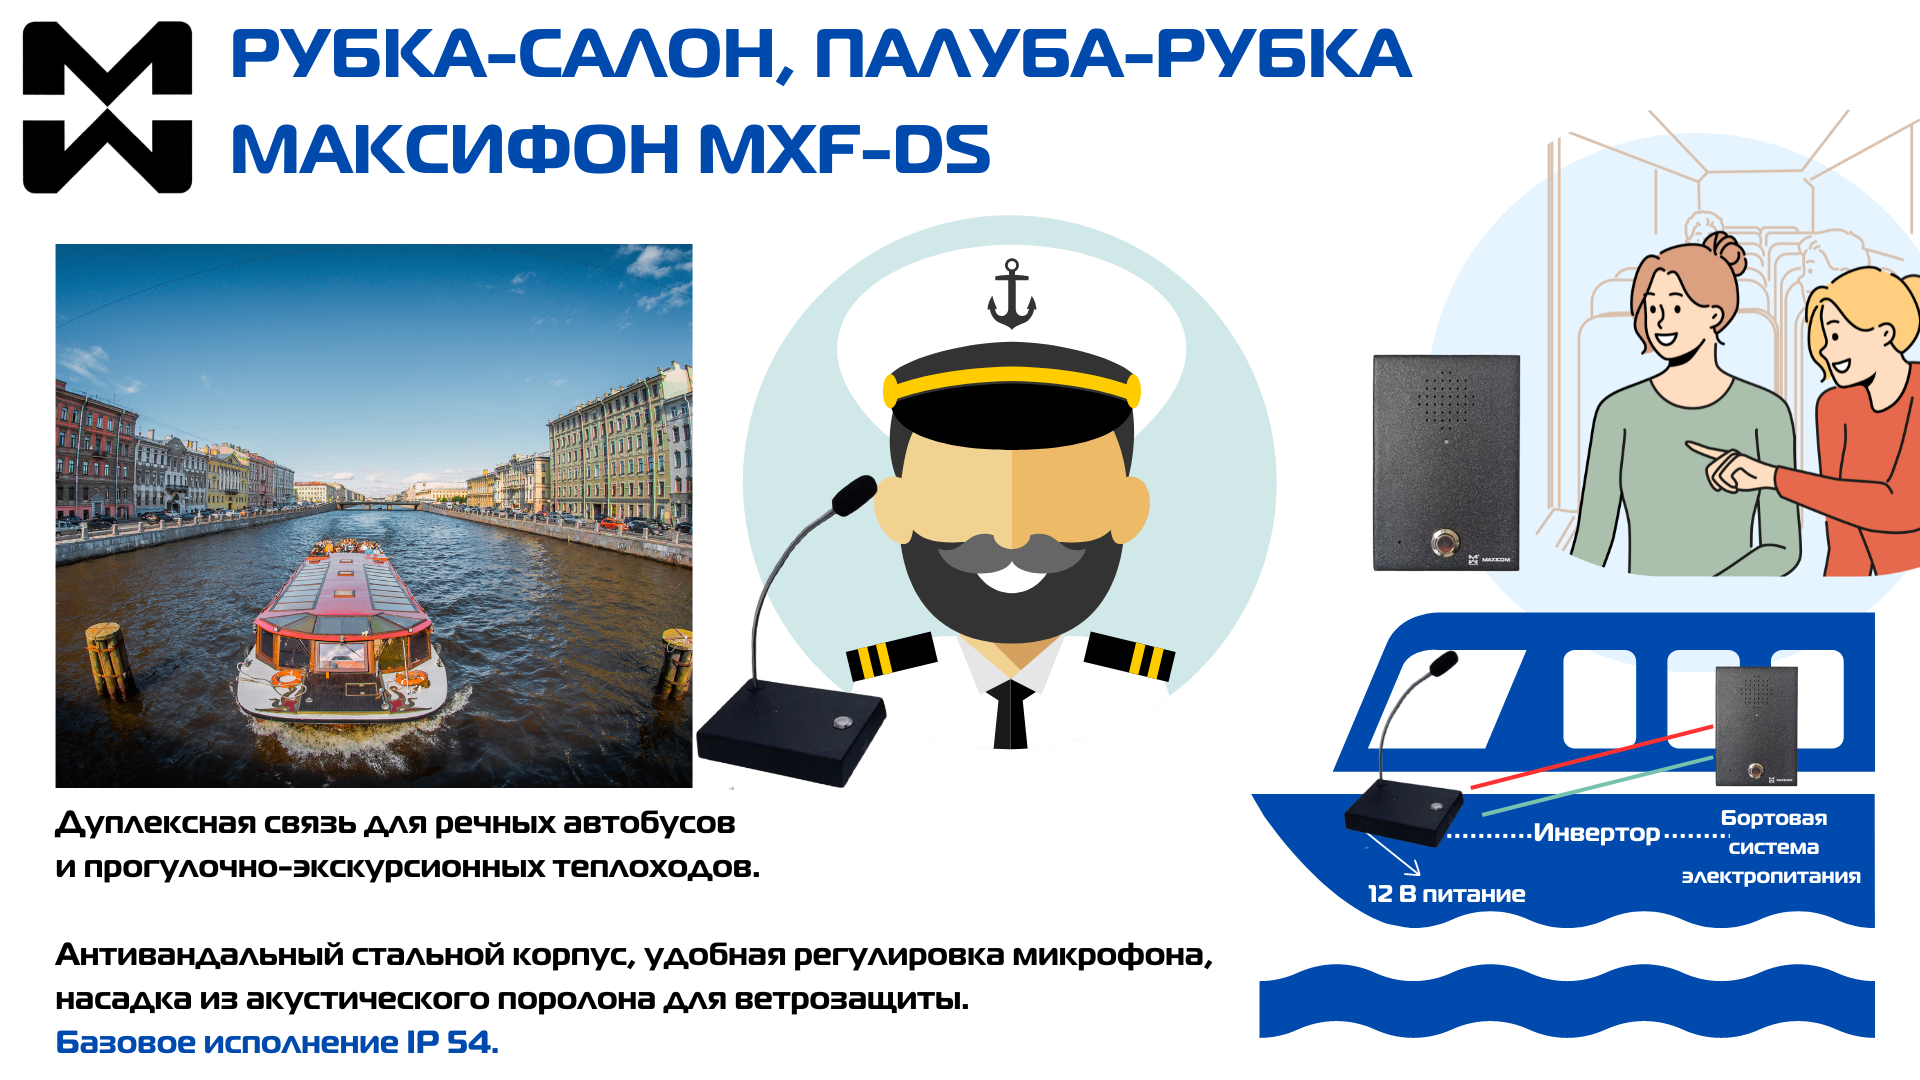 Переговорная связь для водного транспорта  - "Максифон" MXF-DS